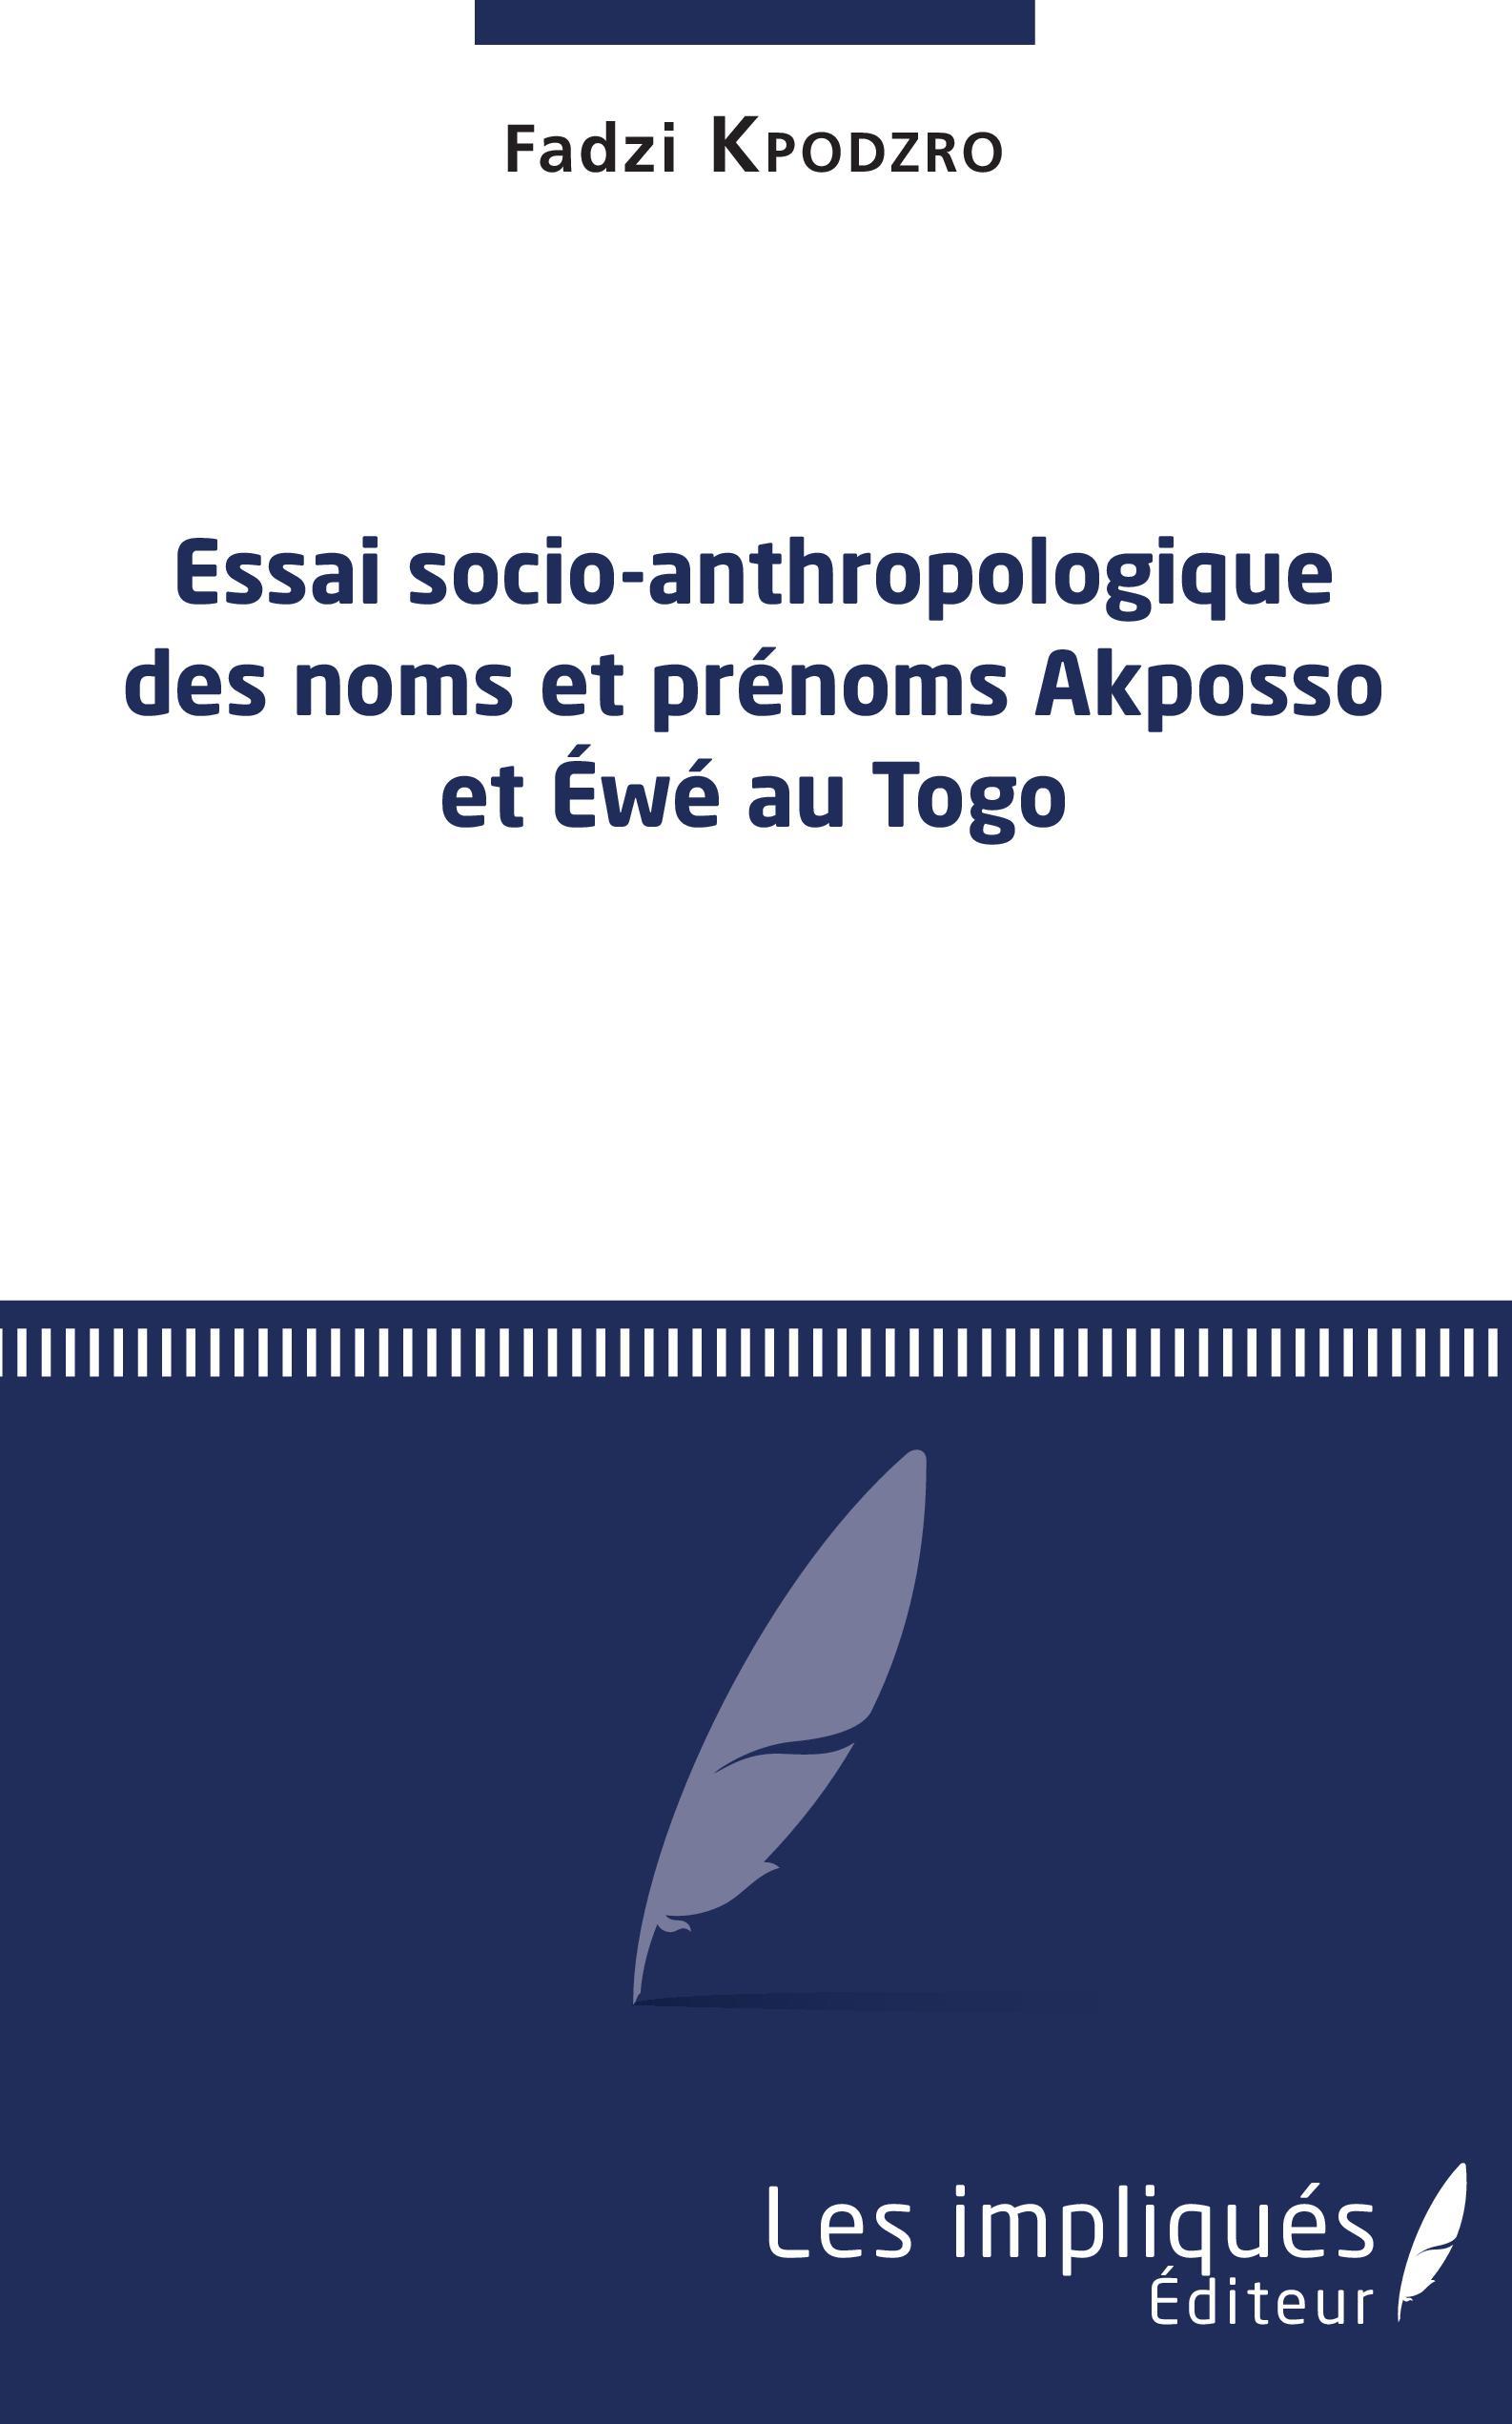 Essai socio-anthropologique des noms et prénoms Akposso et Ewe au Togo (9782343122854-front-cover)